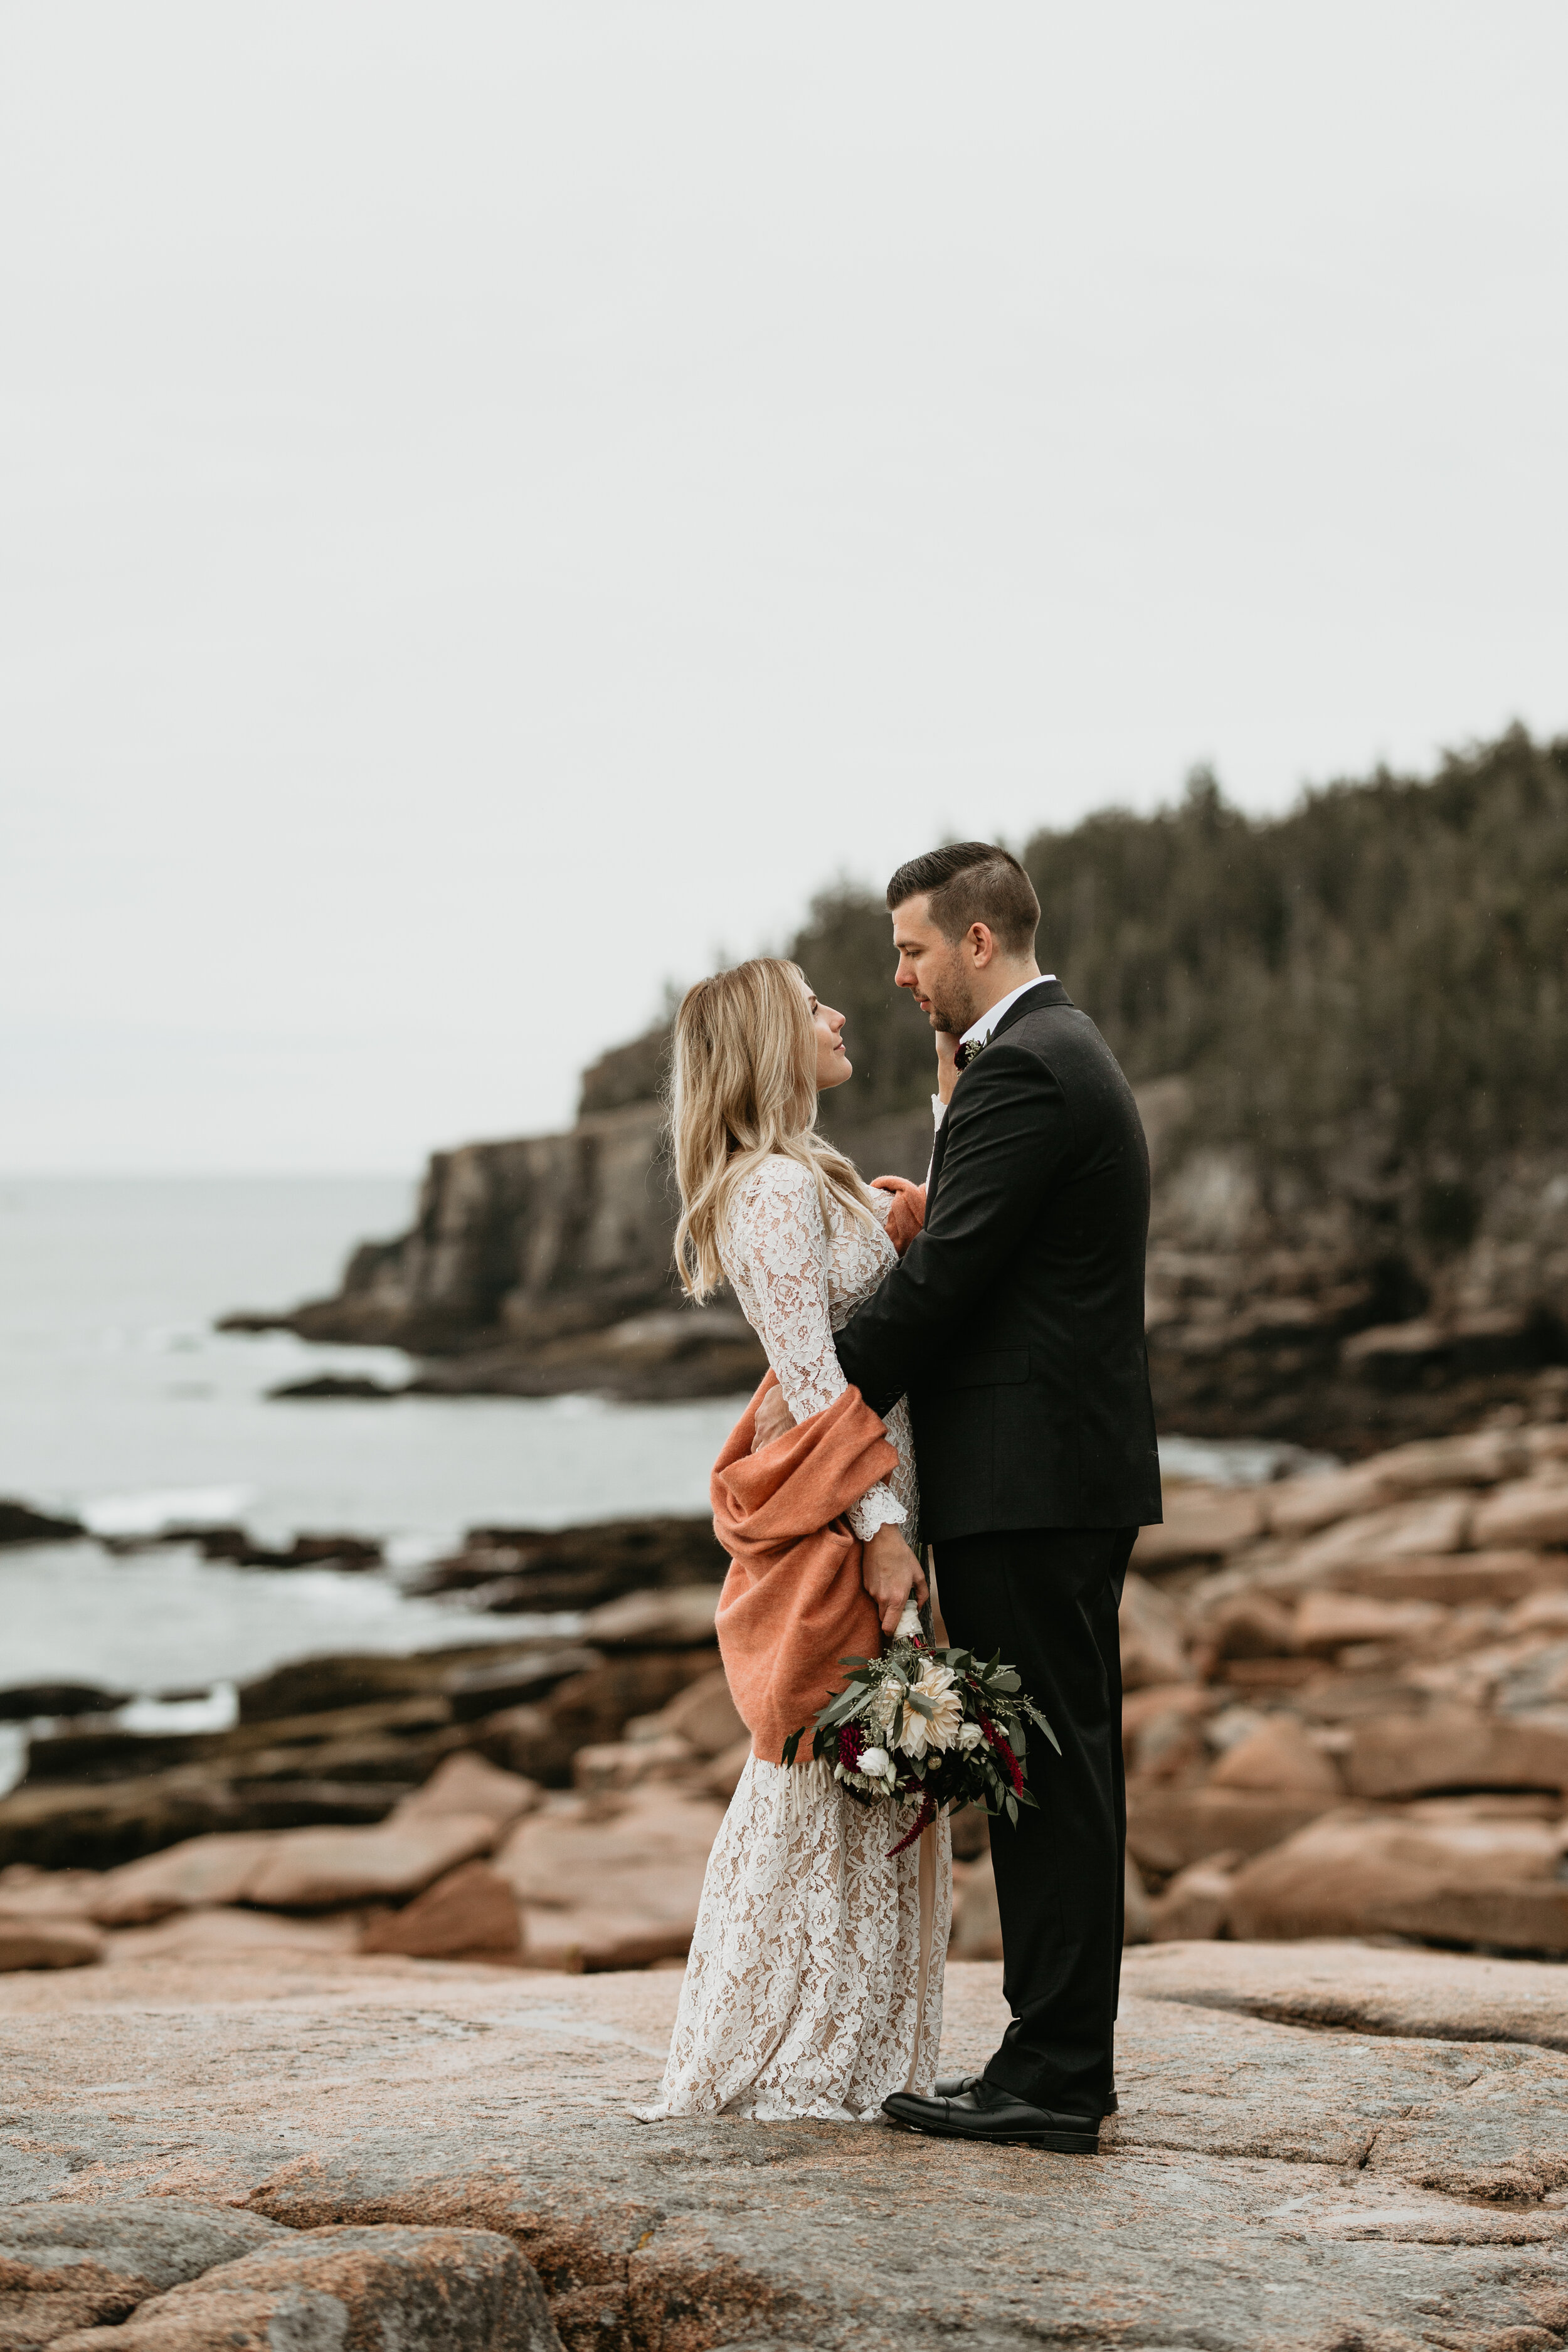 Nicole-Daacke-Photography-Acadia-national-park-elopement-photography-elopement-in-acadia-inspiration-maine-intimate-wedding-destination-elopement-photographer-rainy-day-maine-coast-bar-harbor-elopement-photography-146.jpg